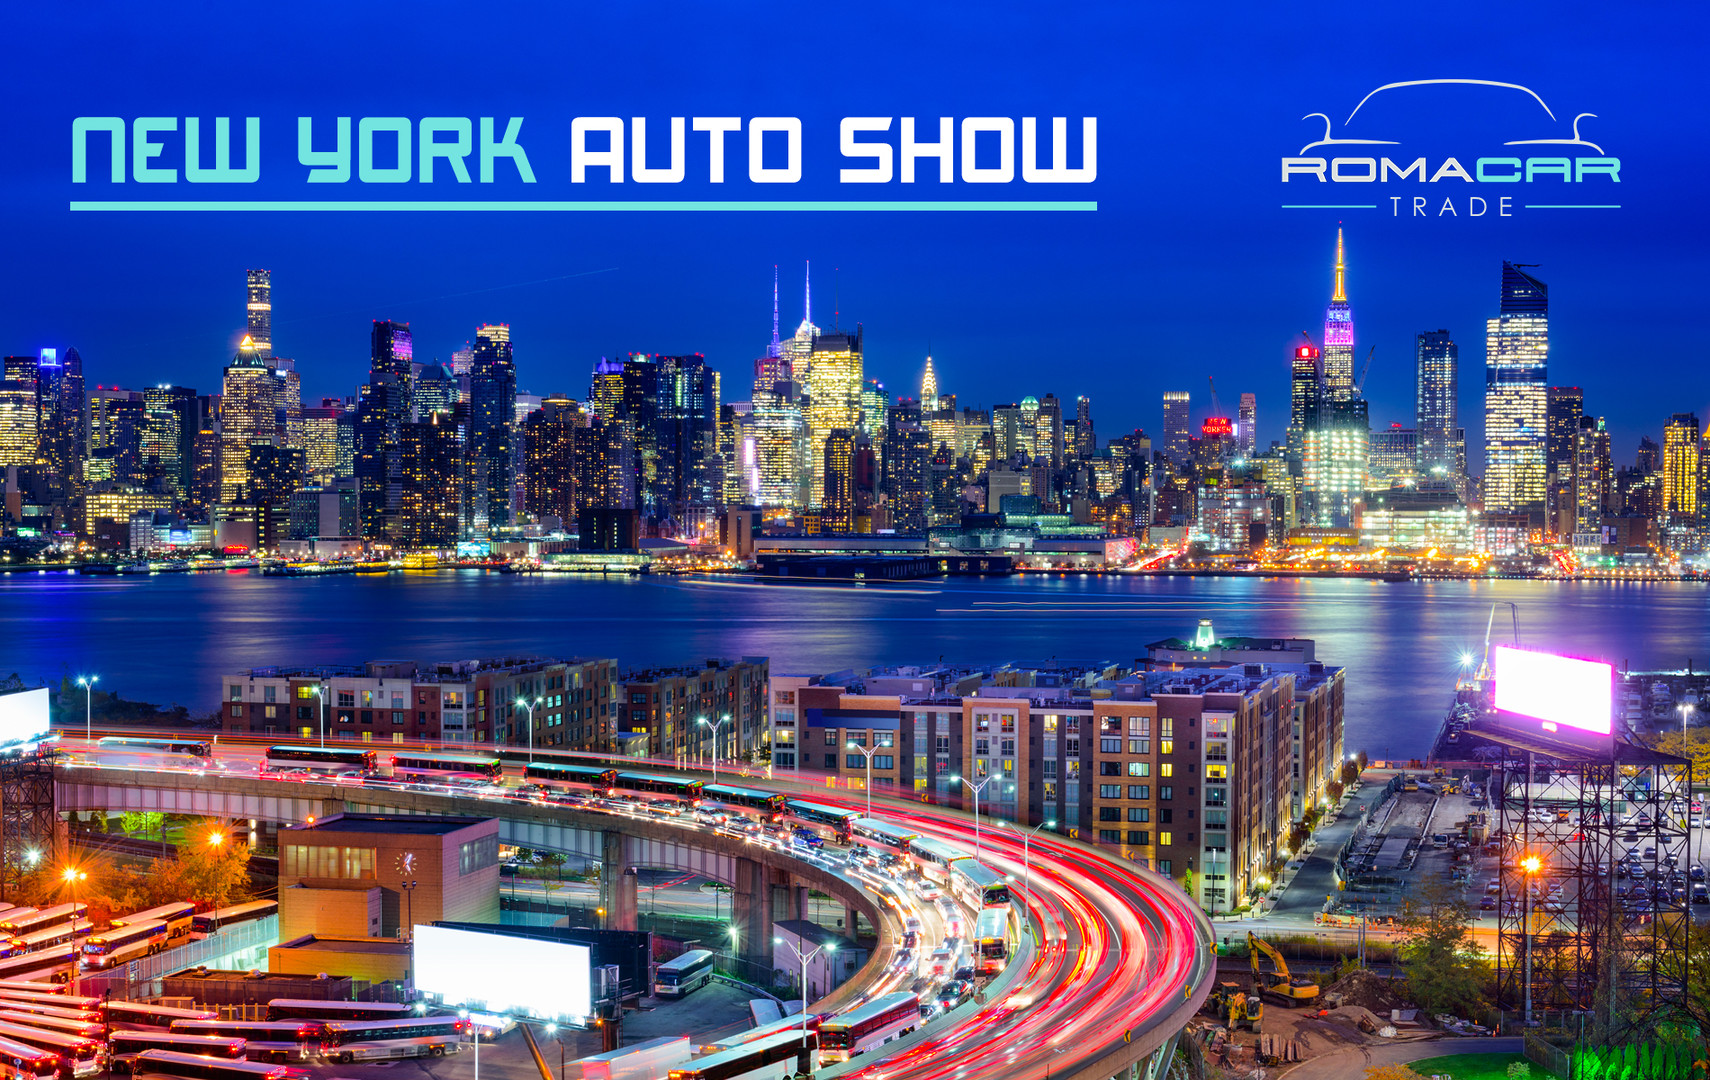 new-york-auto-show-roma-car-trade